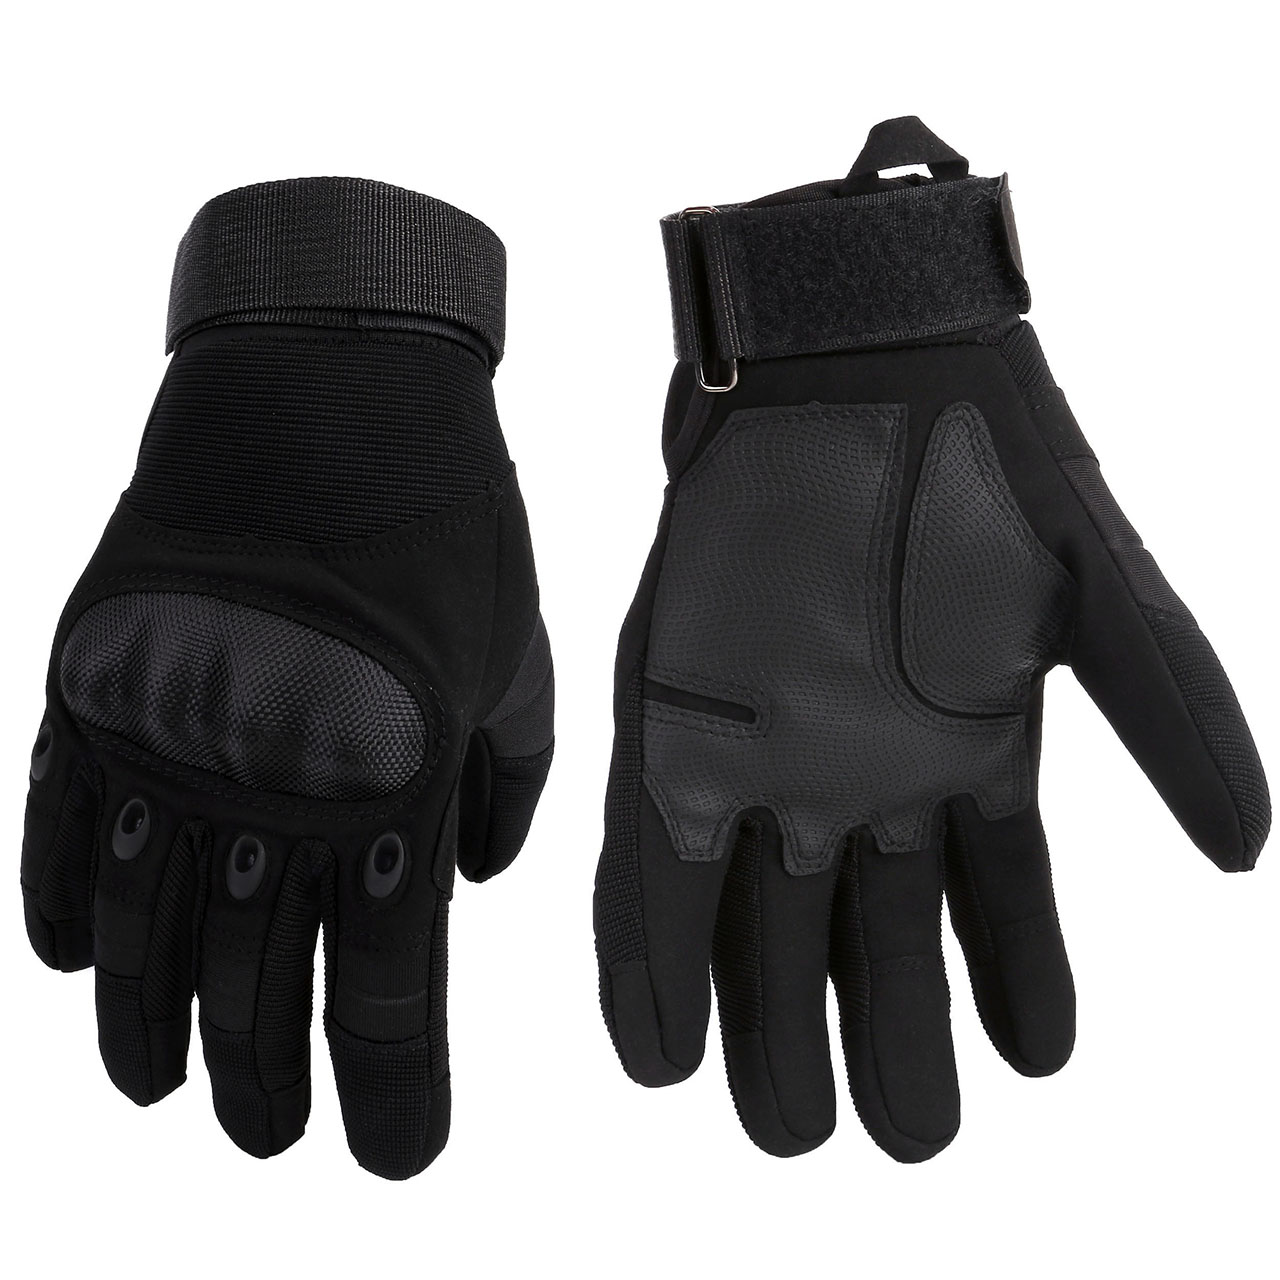 ACBungji Tactical Motorcycle Glove Full Finger Hard Knuckle Outdoor Training Gloves for Men Women (Black)